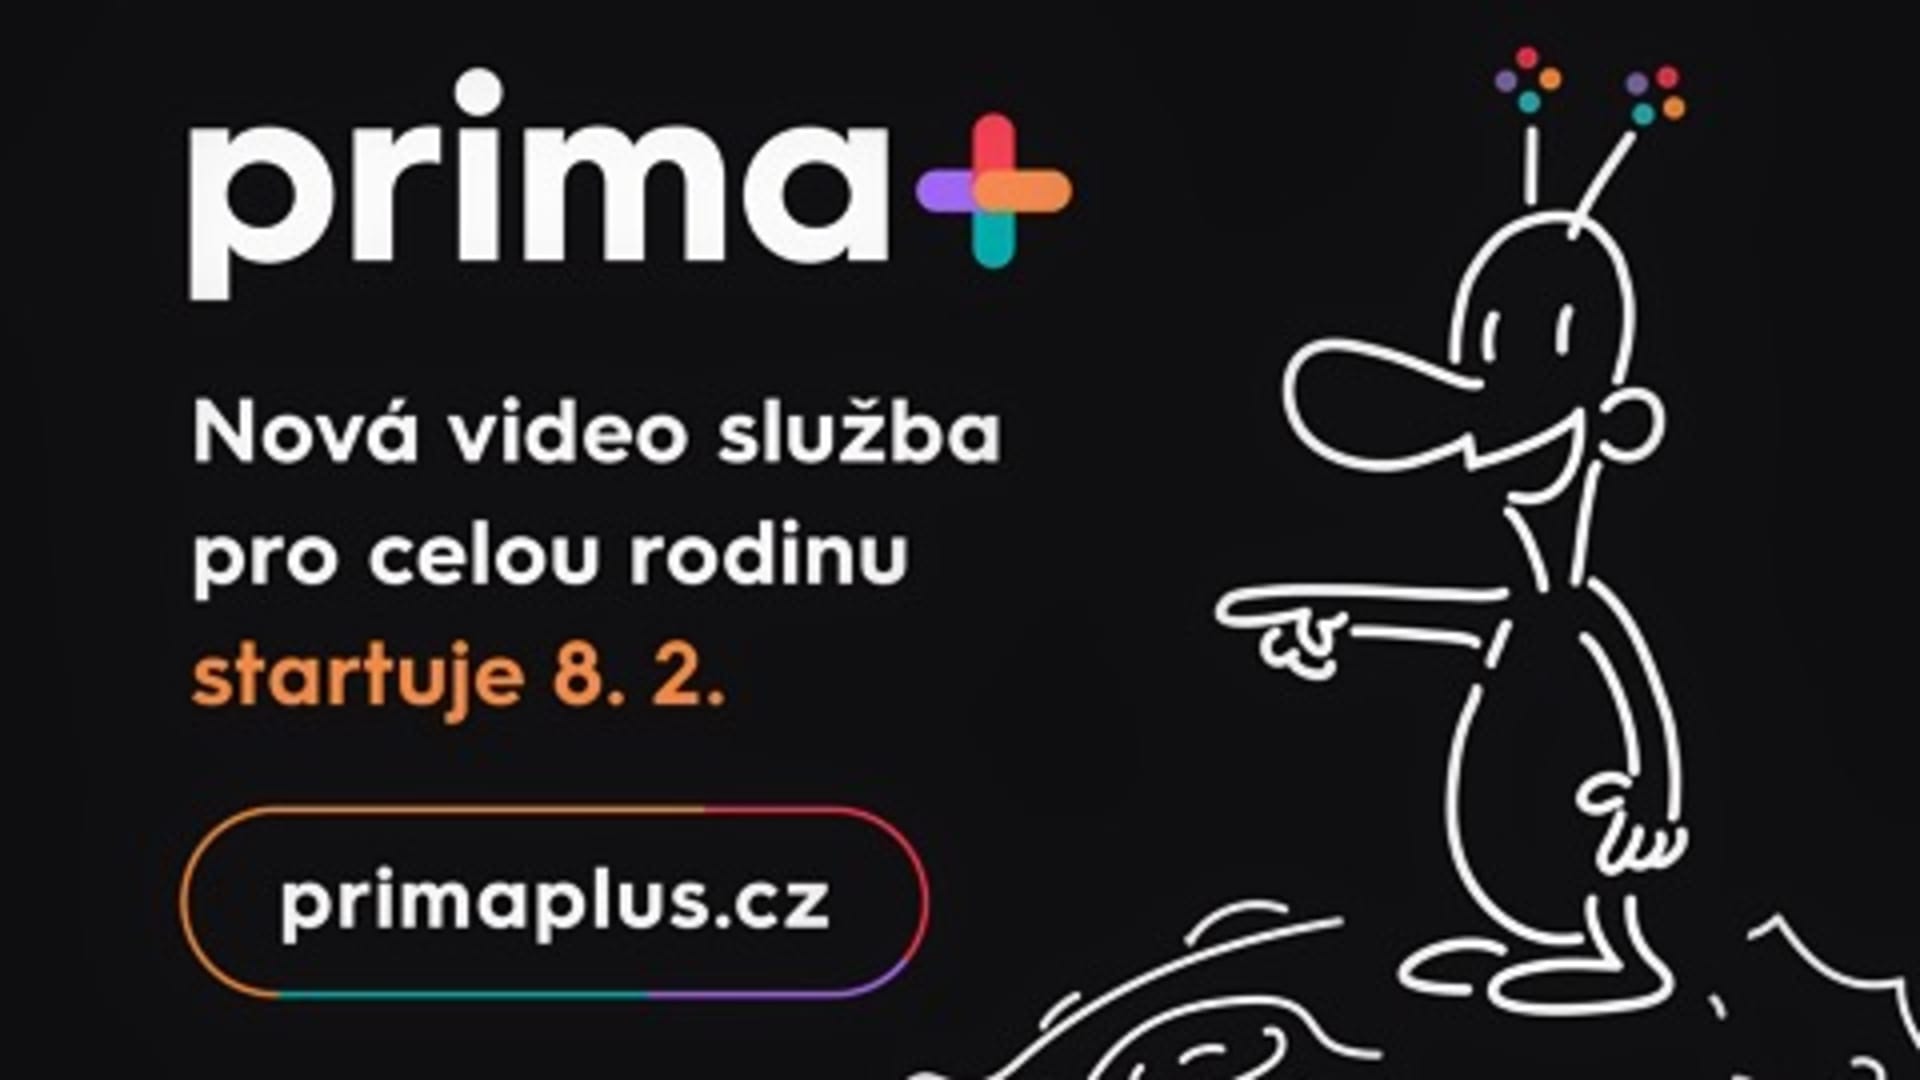 Streamovací služba prima+ startuje od 8. února na primaplus.cz.